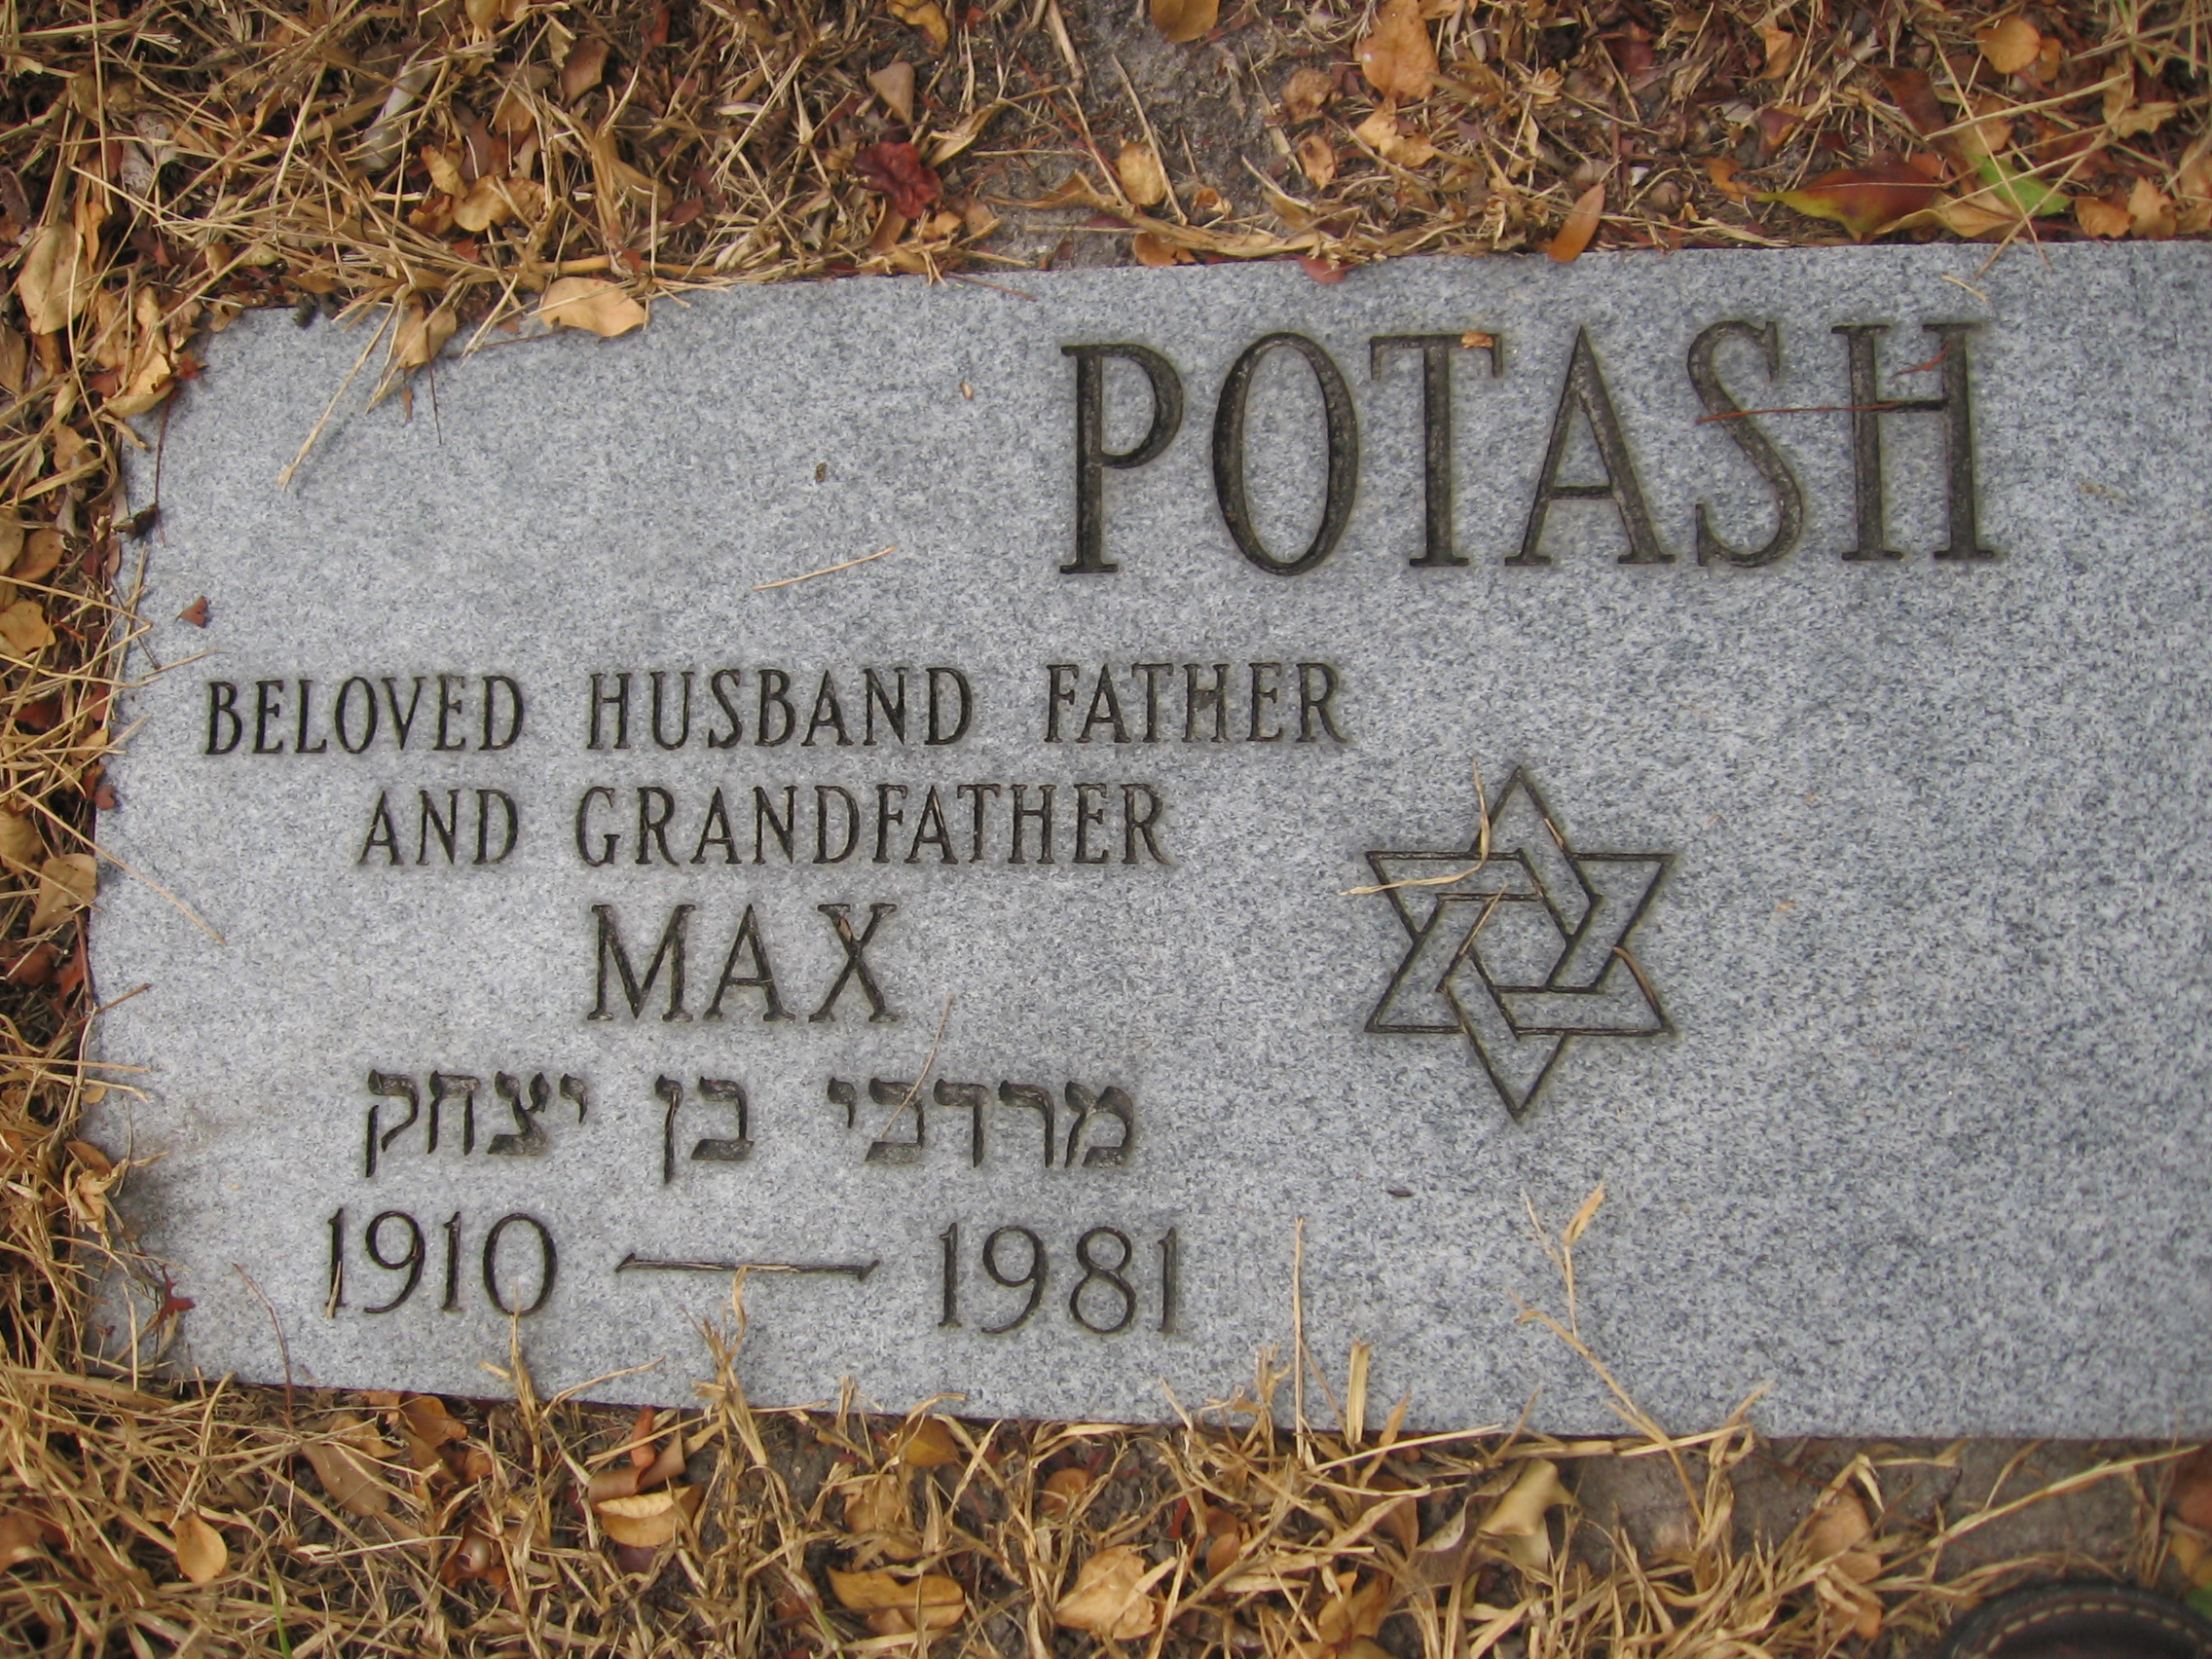 Max Potash